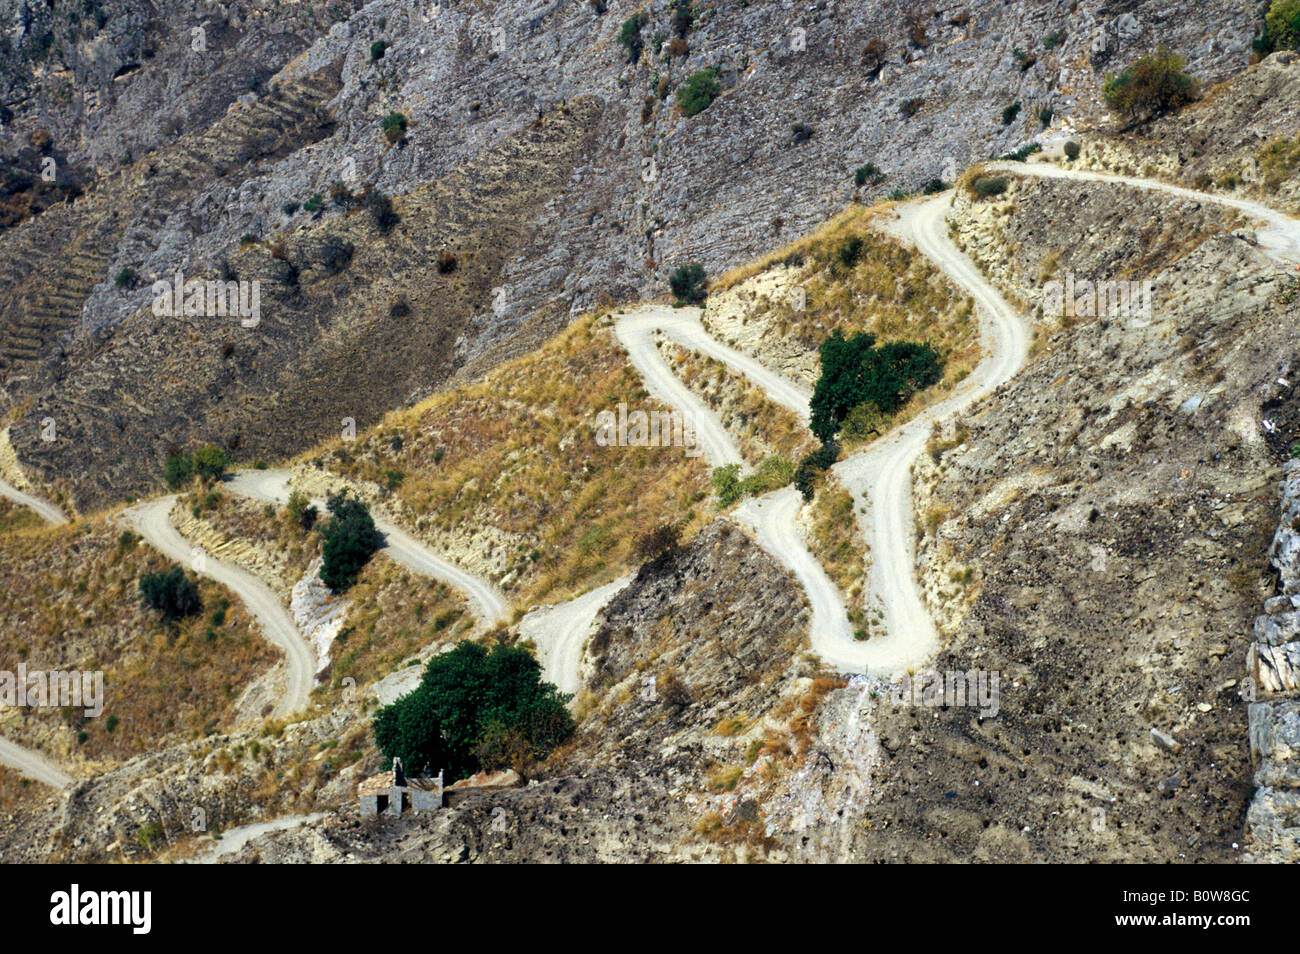 Road winding up arid landscape with sparse vegetation, Castelmola near Taormina, Sicily, Italy, Europe Stock Photo